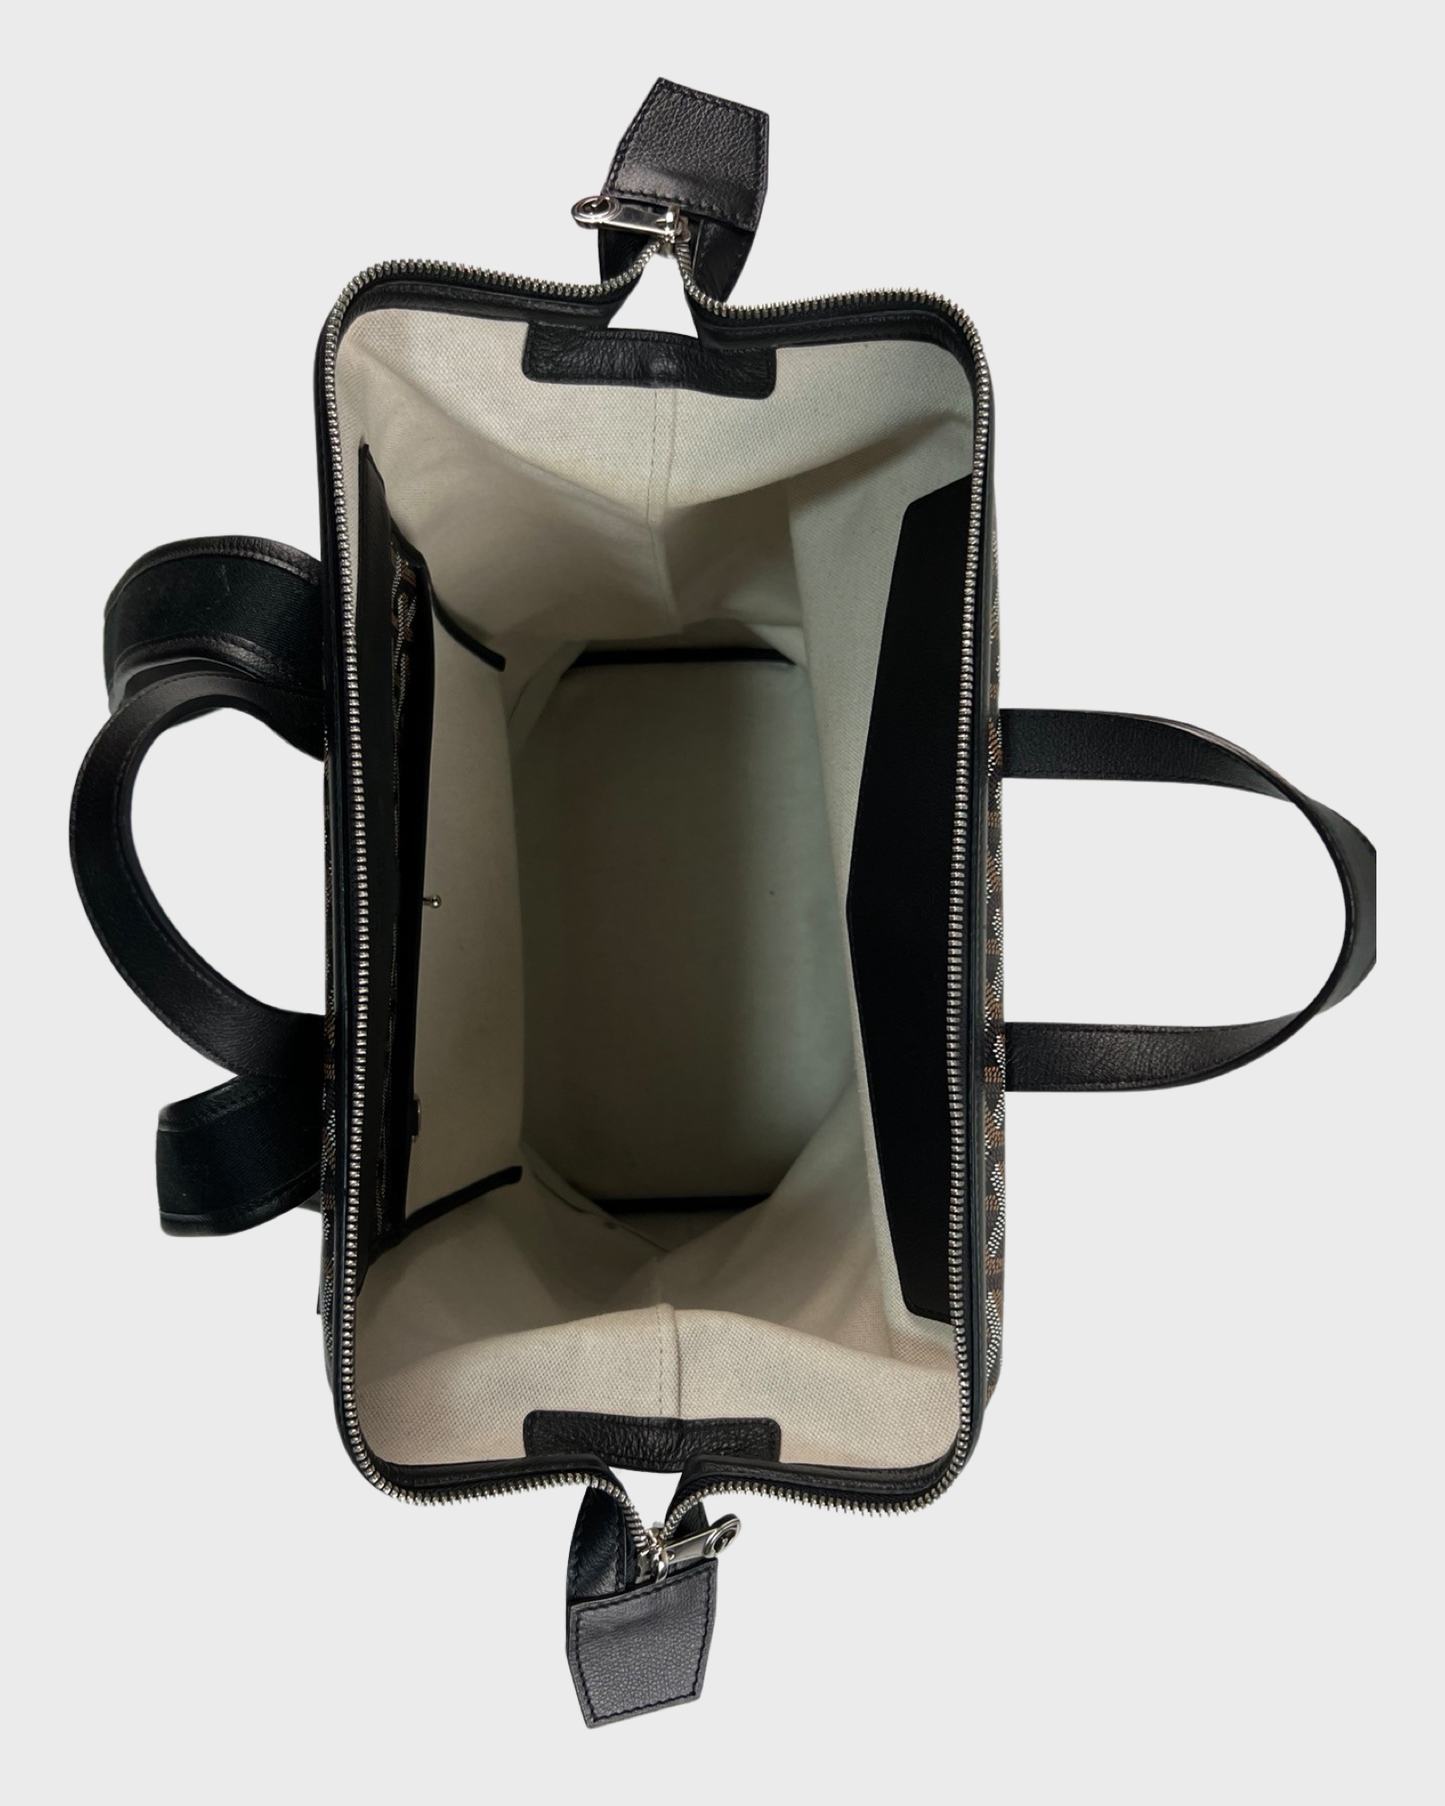 Goyard Cisalpin Backpack in black SZ:OS